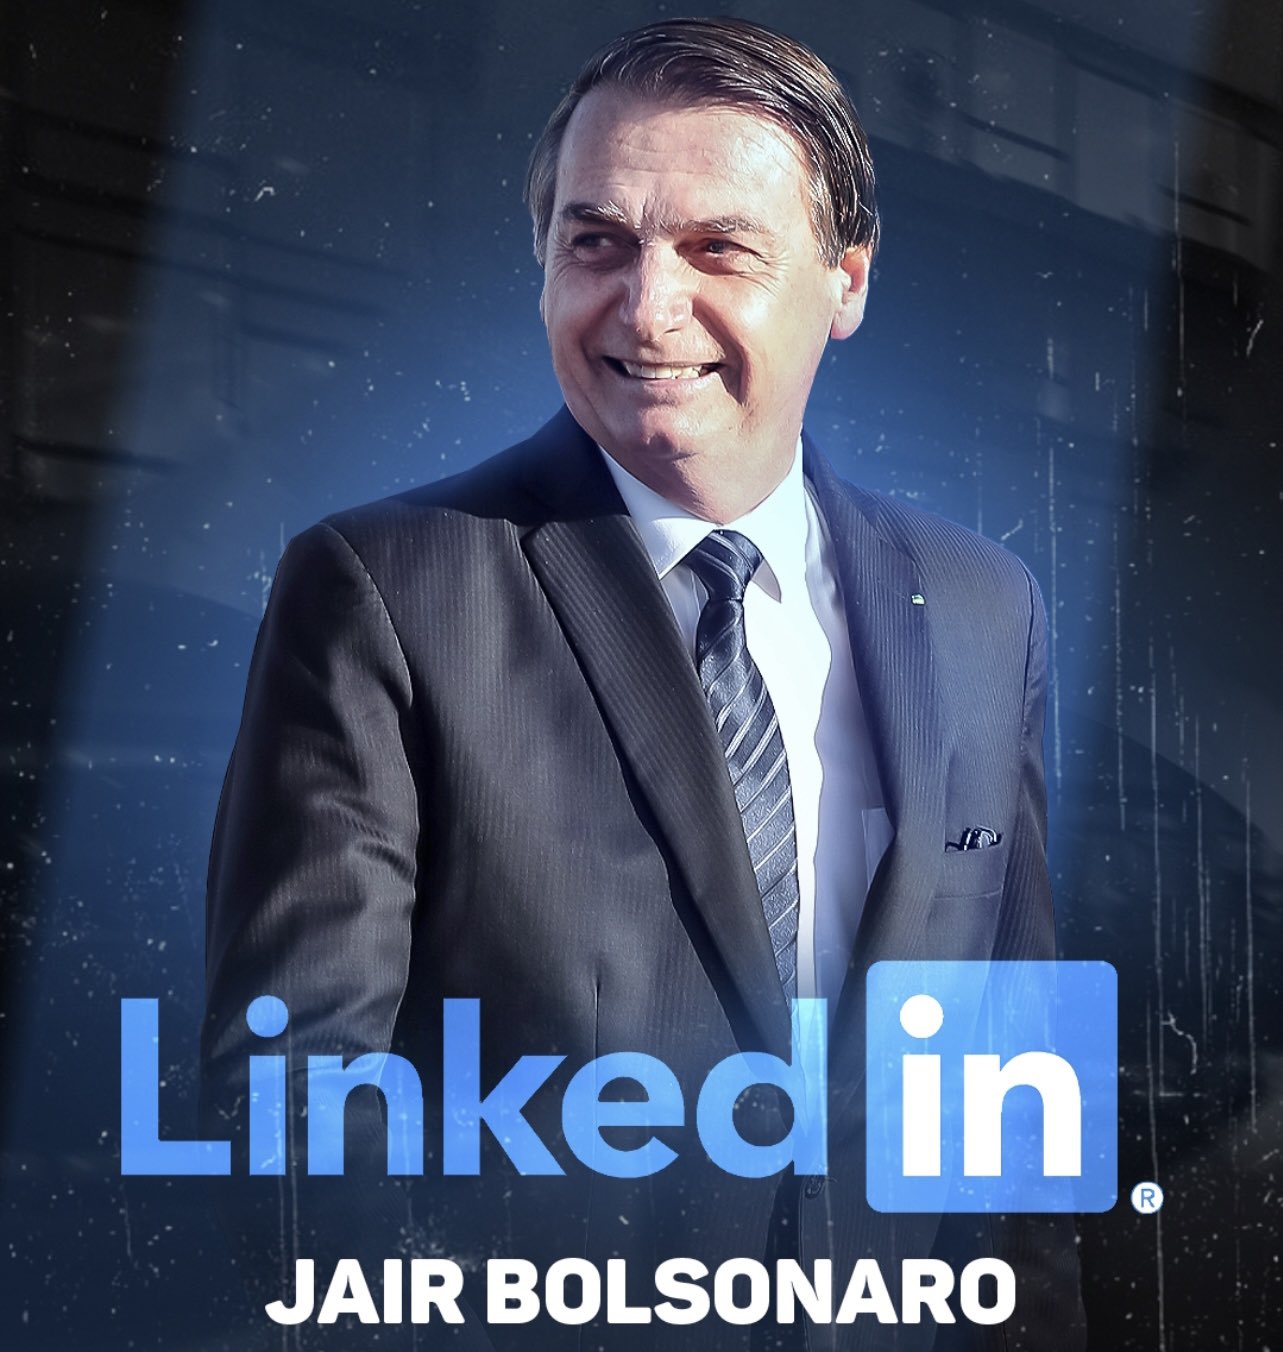 Carlos Bolsonaro posted on LinkedIn